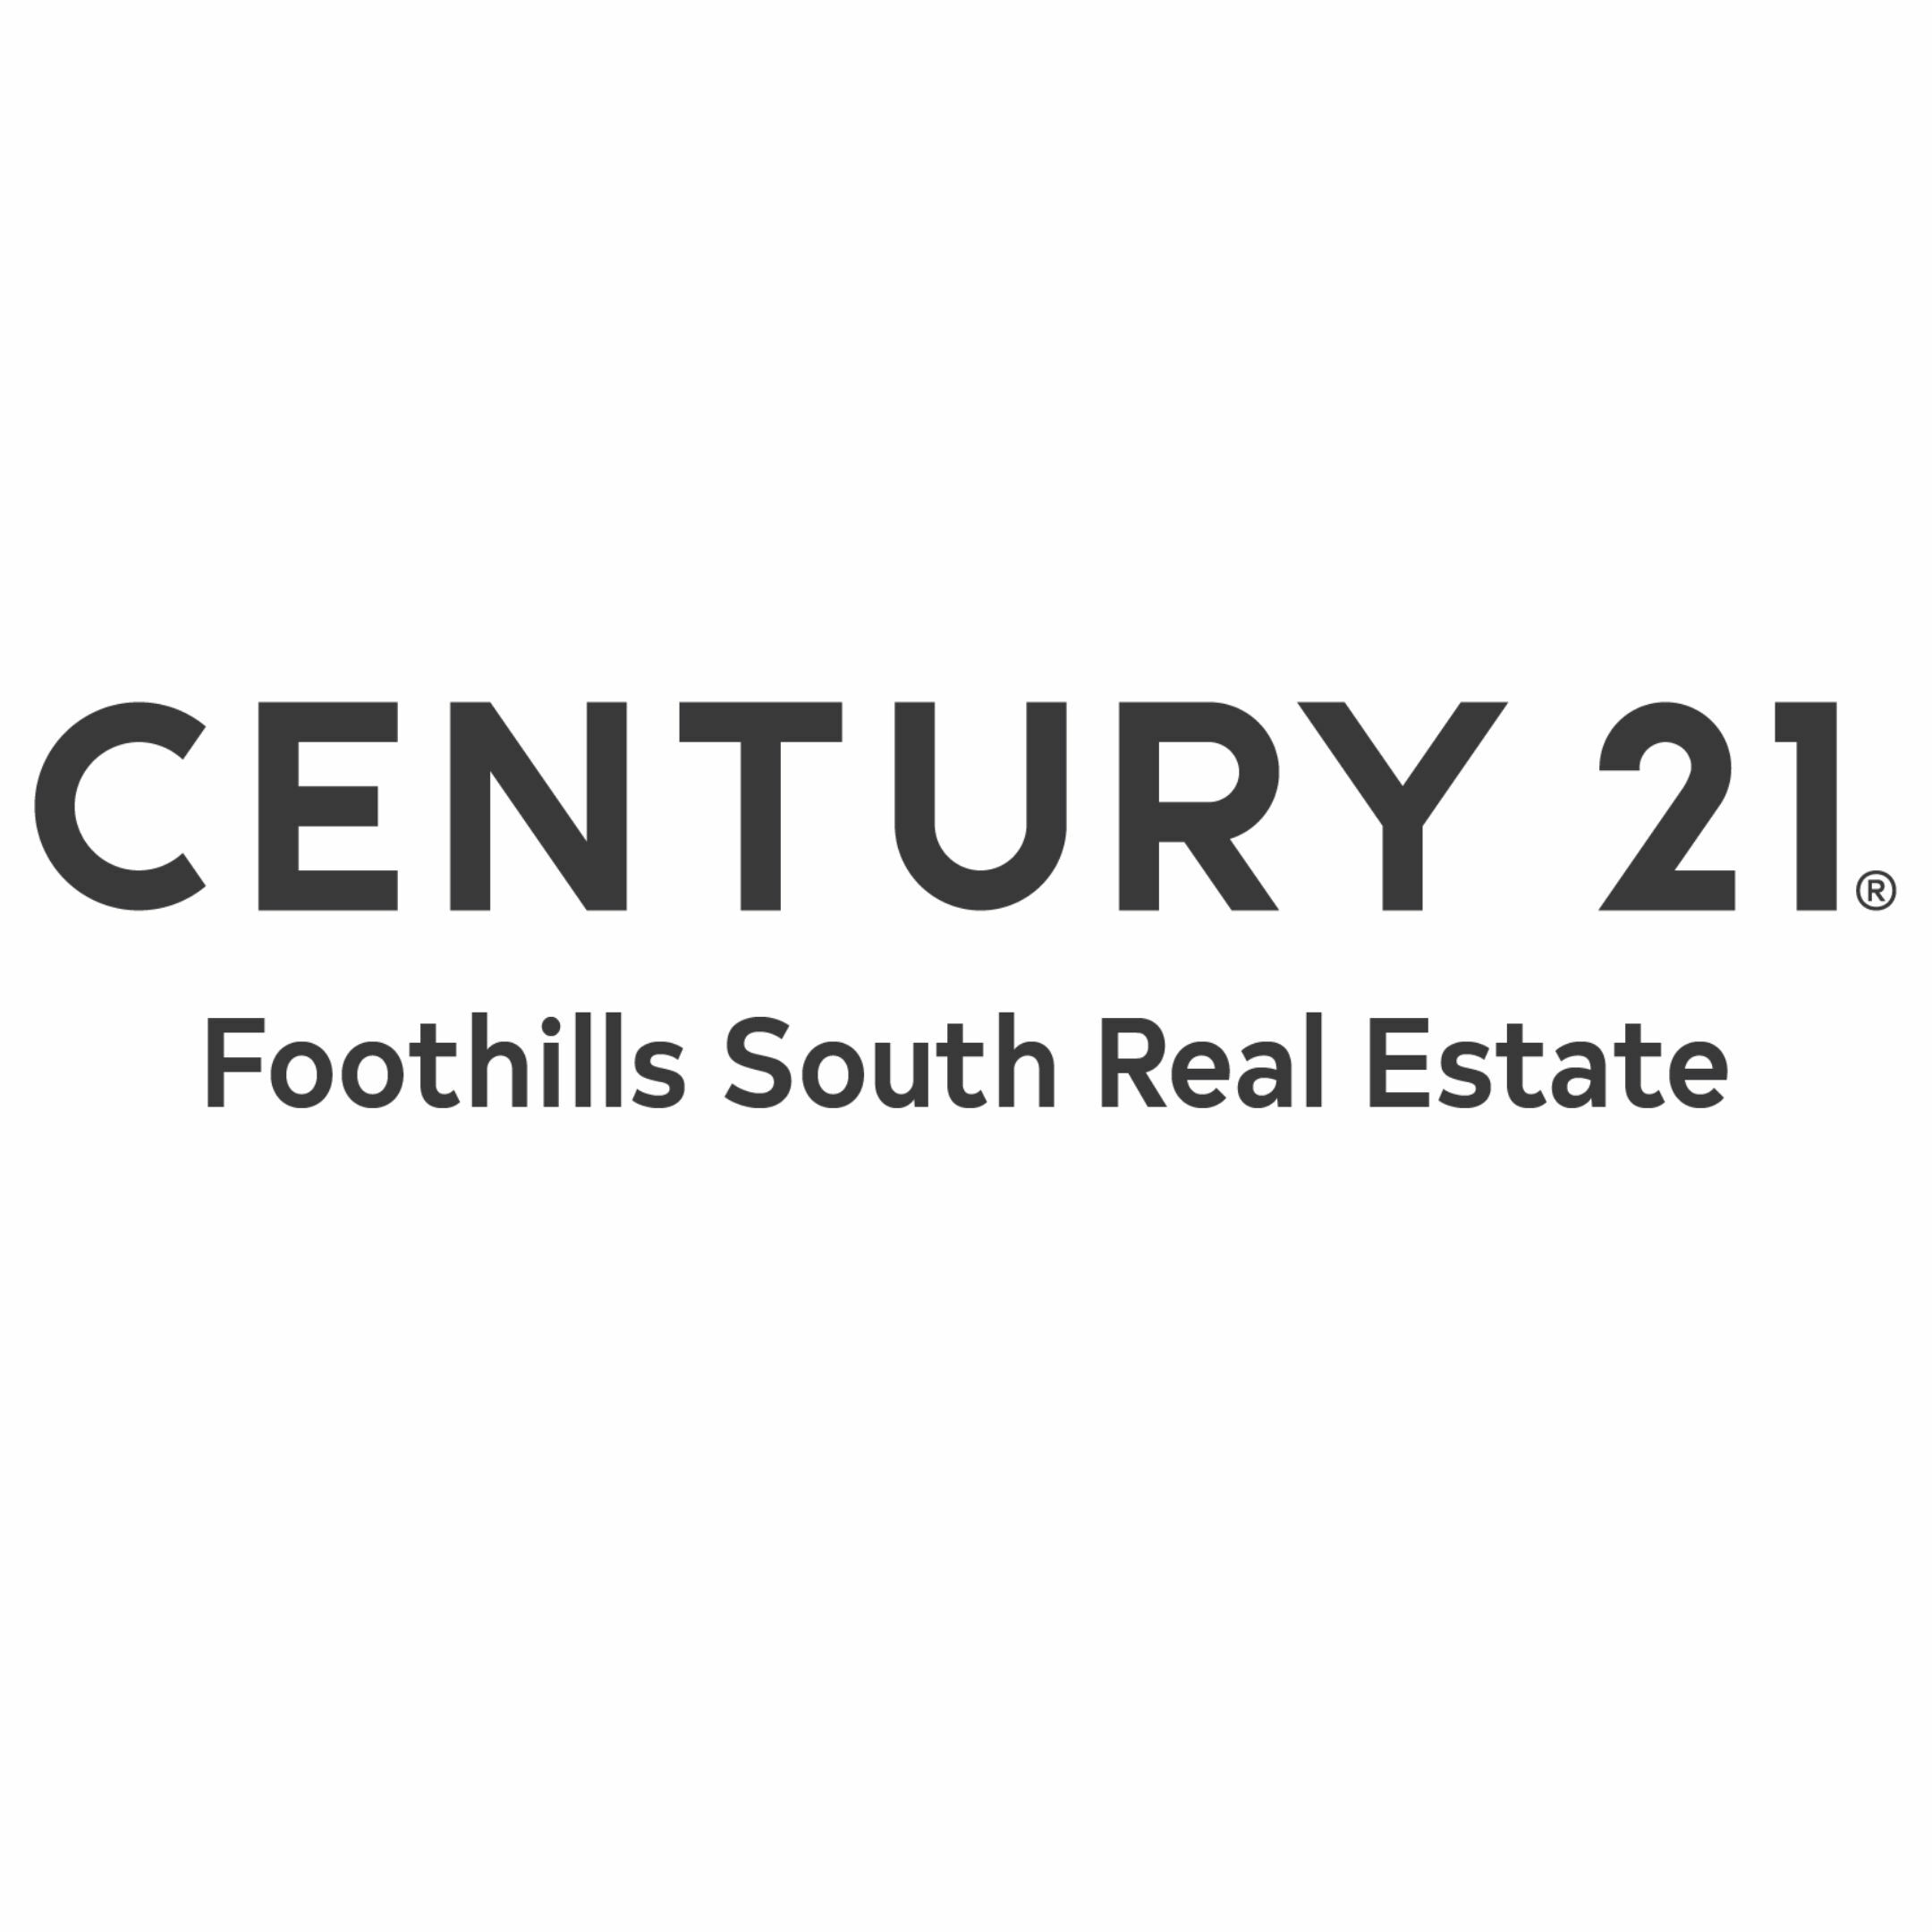 CENTURY 21 Foothills South Real Estate,Lethbridge,CENTURY 21 Canada